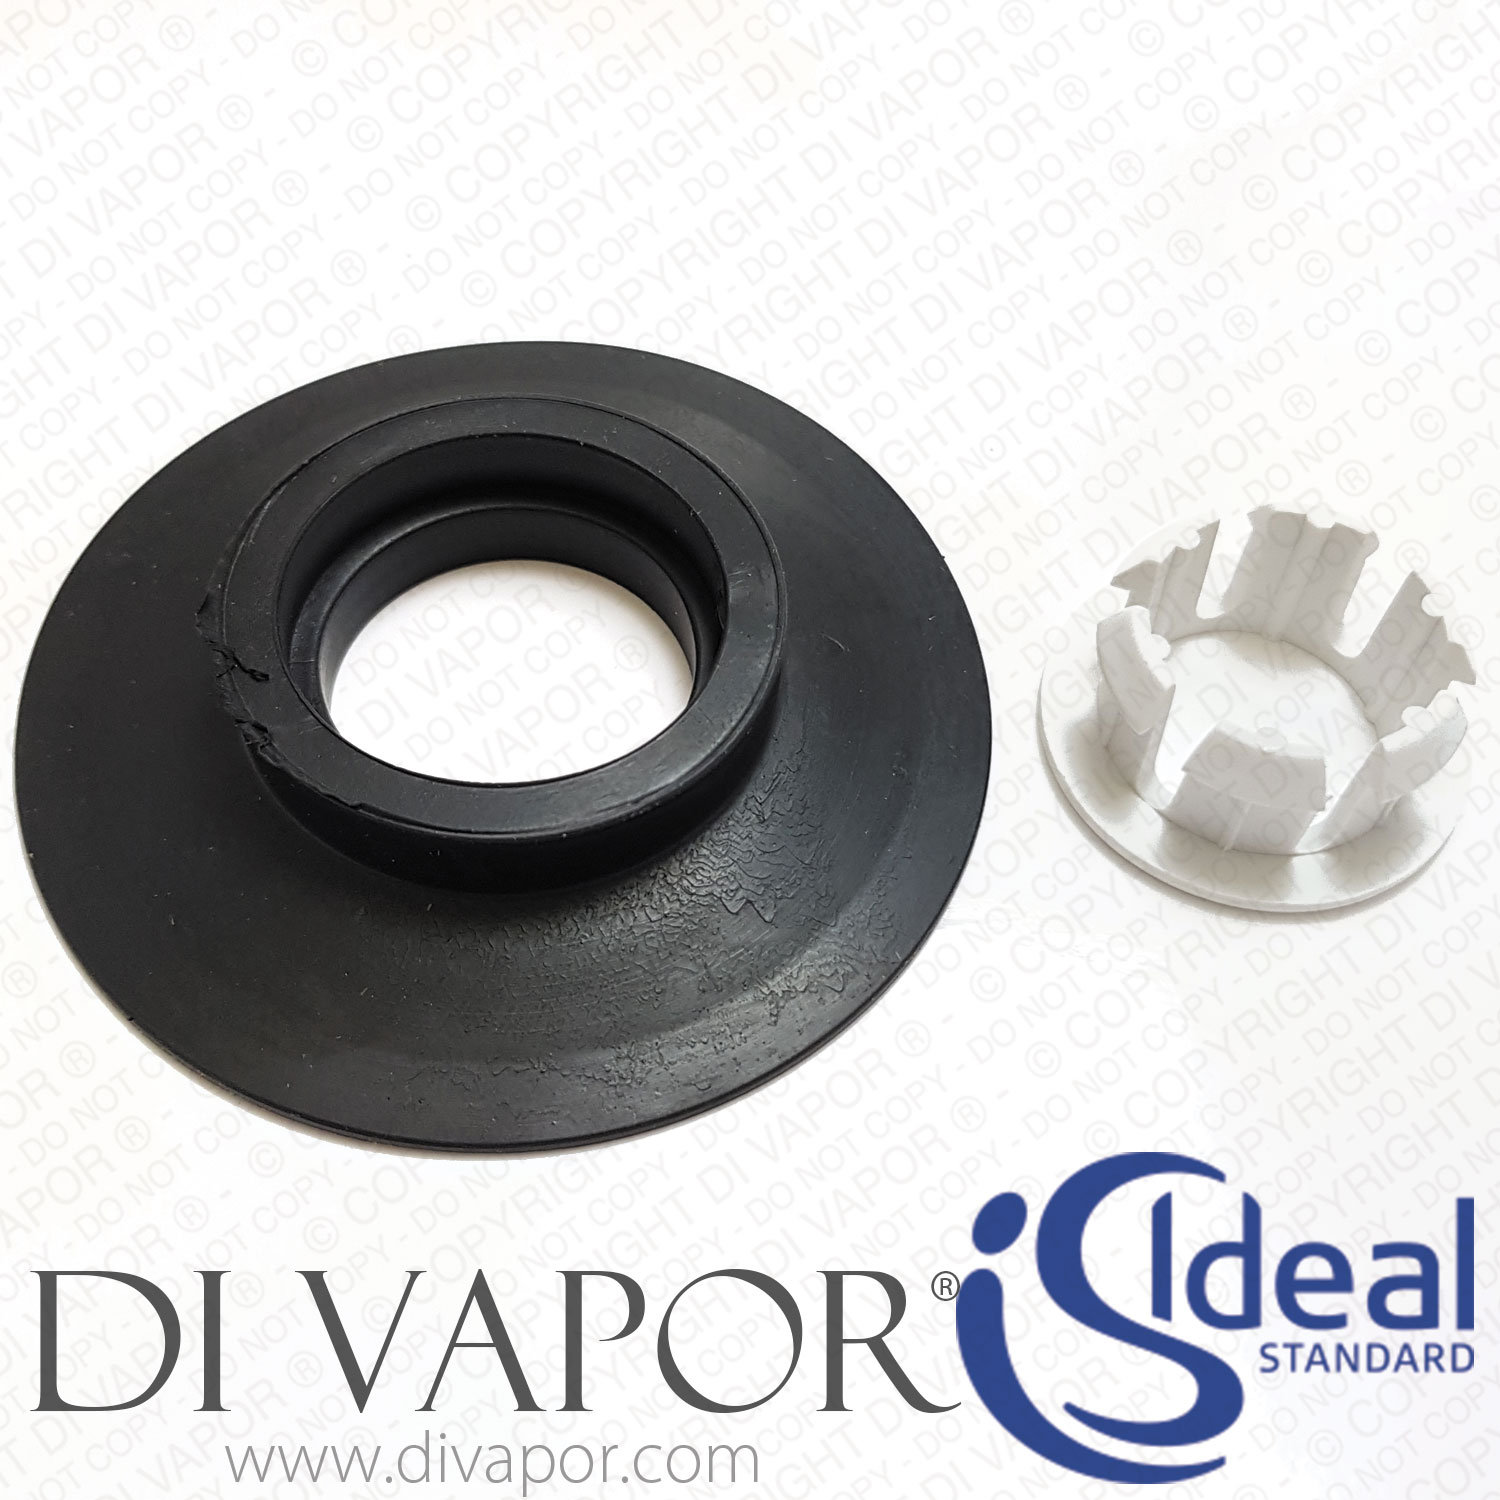 Ideal Standard SV01967 Dual Flushvalve Seal and Clip